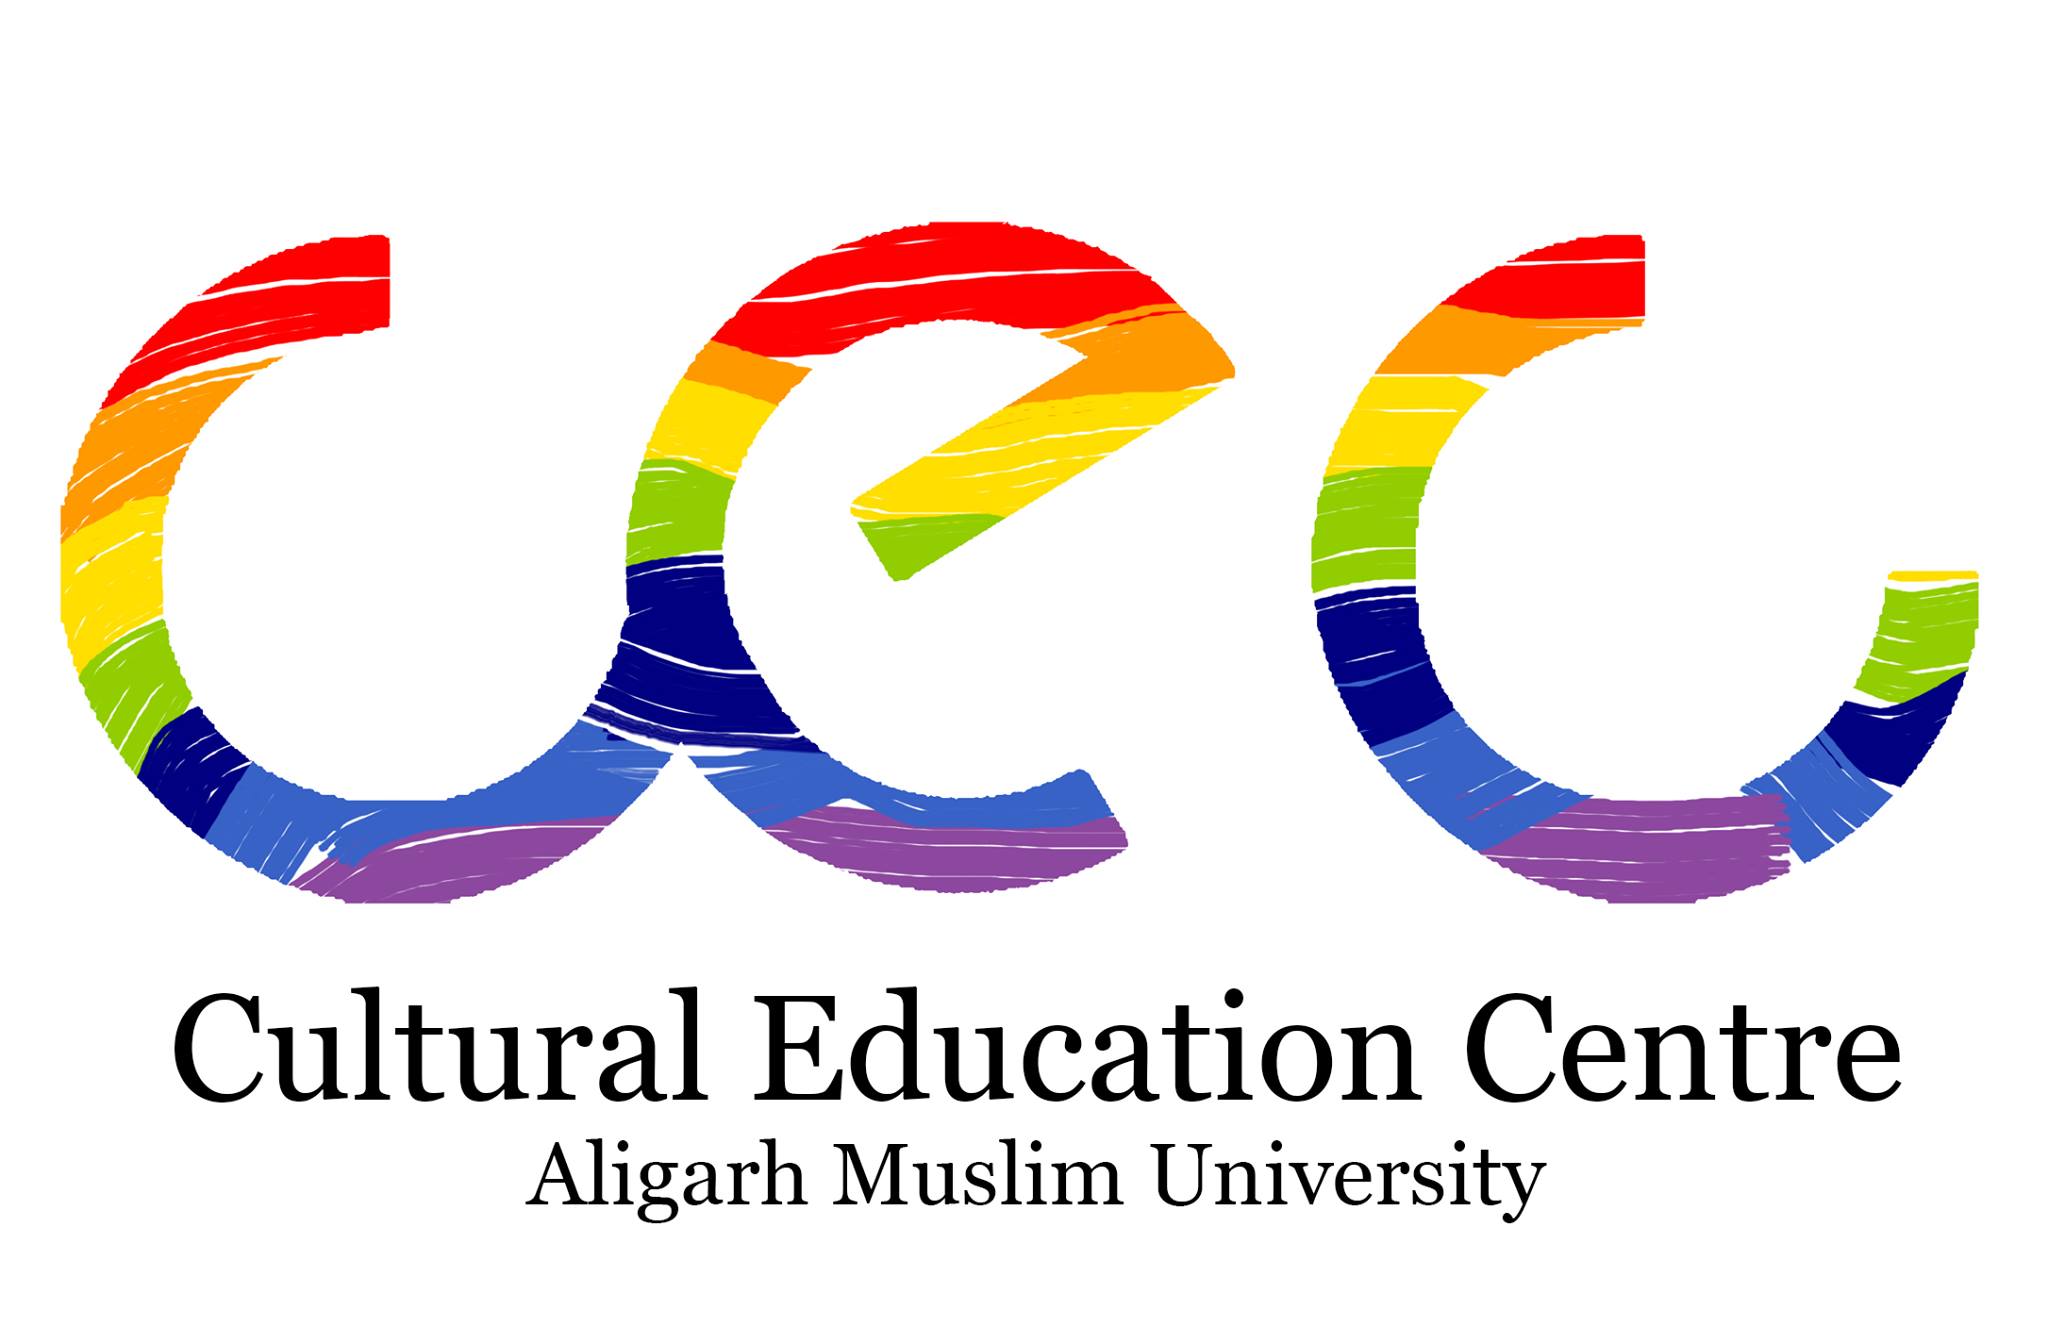 CEC Logo - CEC logo